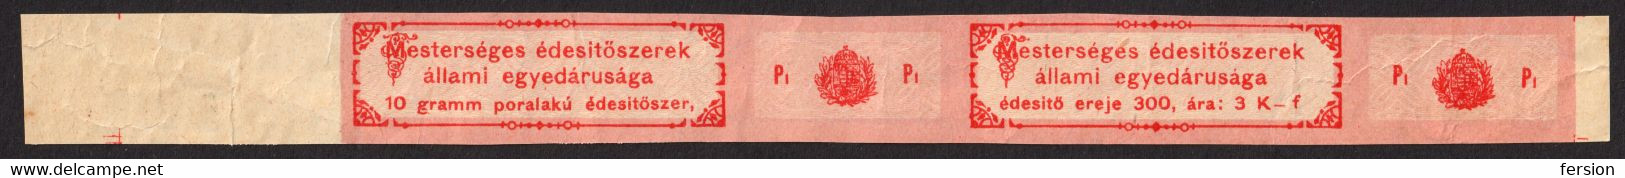 1912 Hungary - SUGAR Substitute Seal Tax Stamp Stripe P1 - 3.- K - Revenue Tax SEAL - MBIK Cat. No. 1. - Revenue Stamps